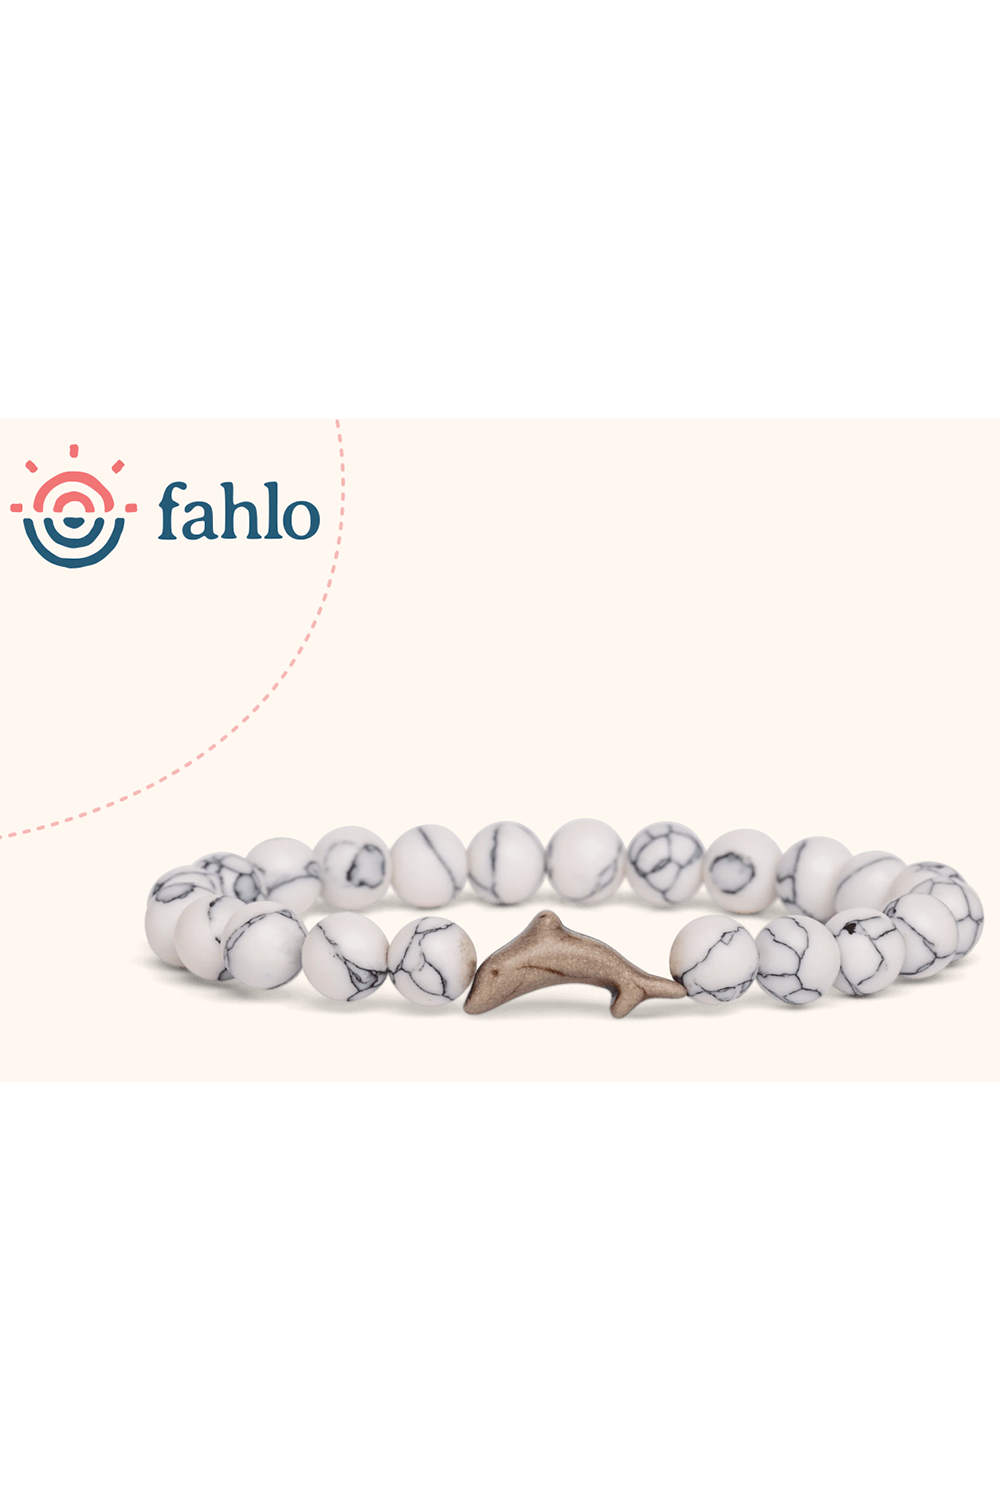 Fahlo Odyssey Bracelet - White Howlite